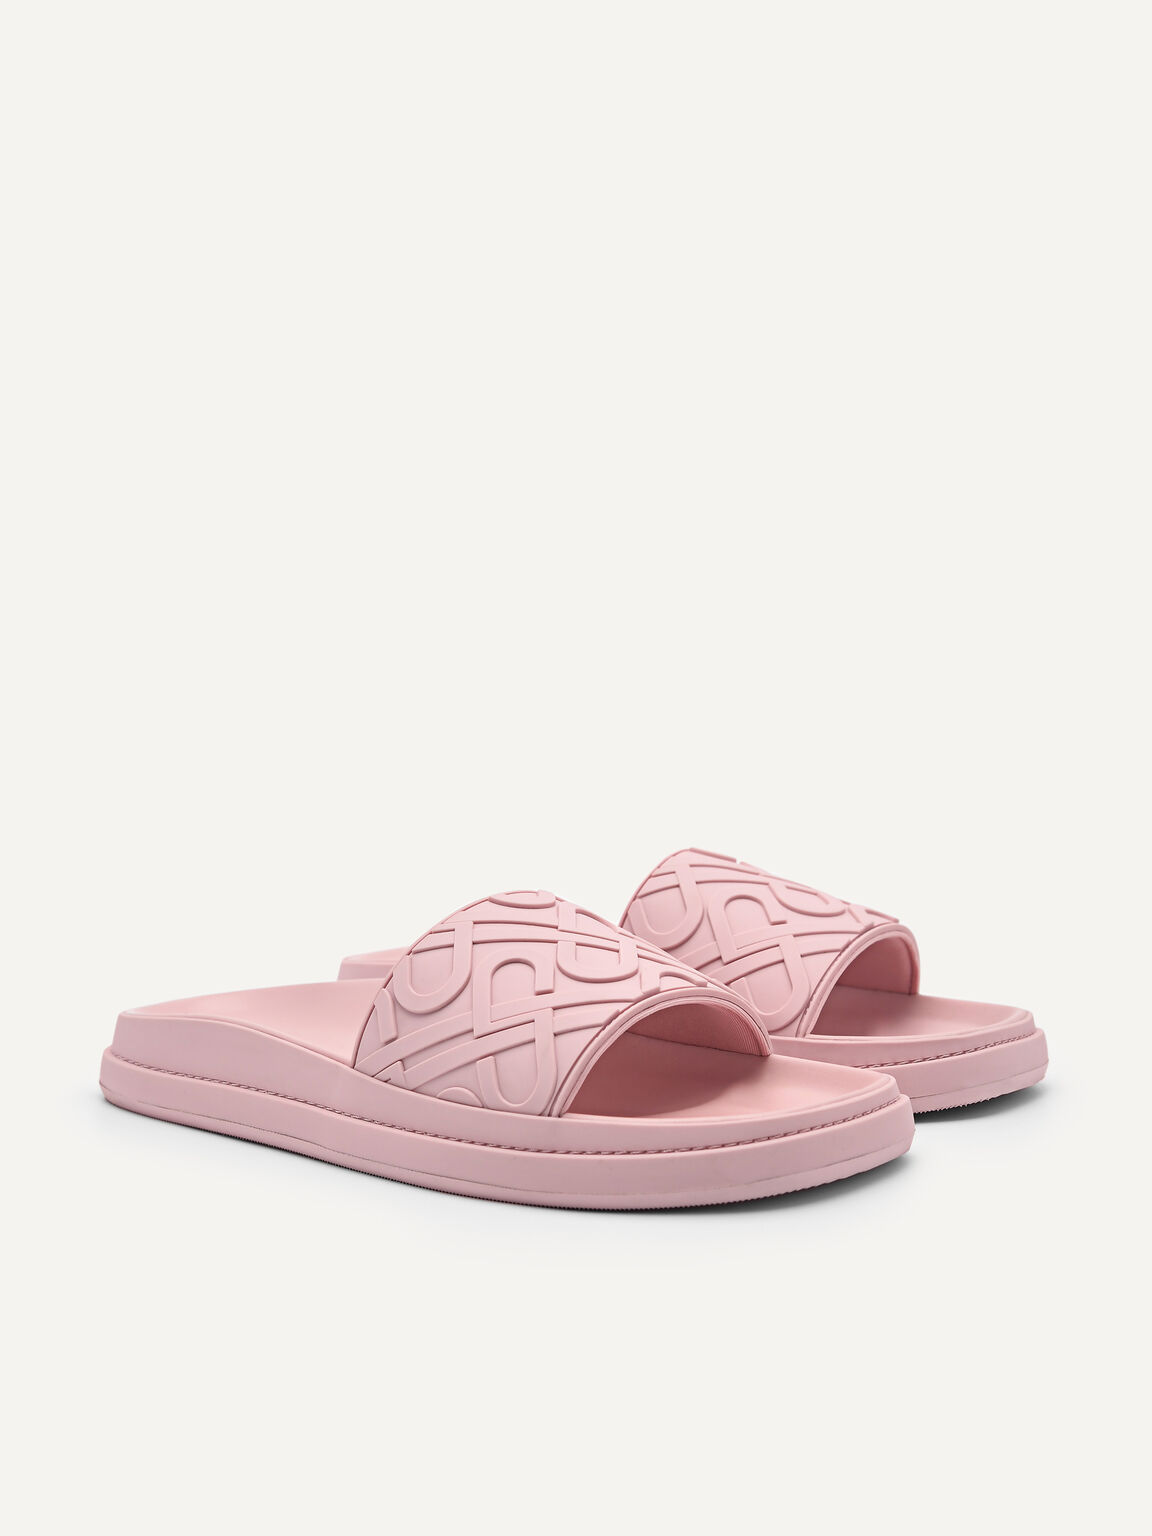 PEDRO標誌壓紋拖鞋, 粉色